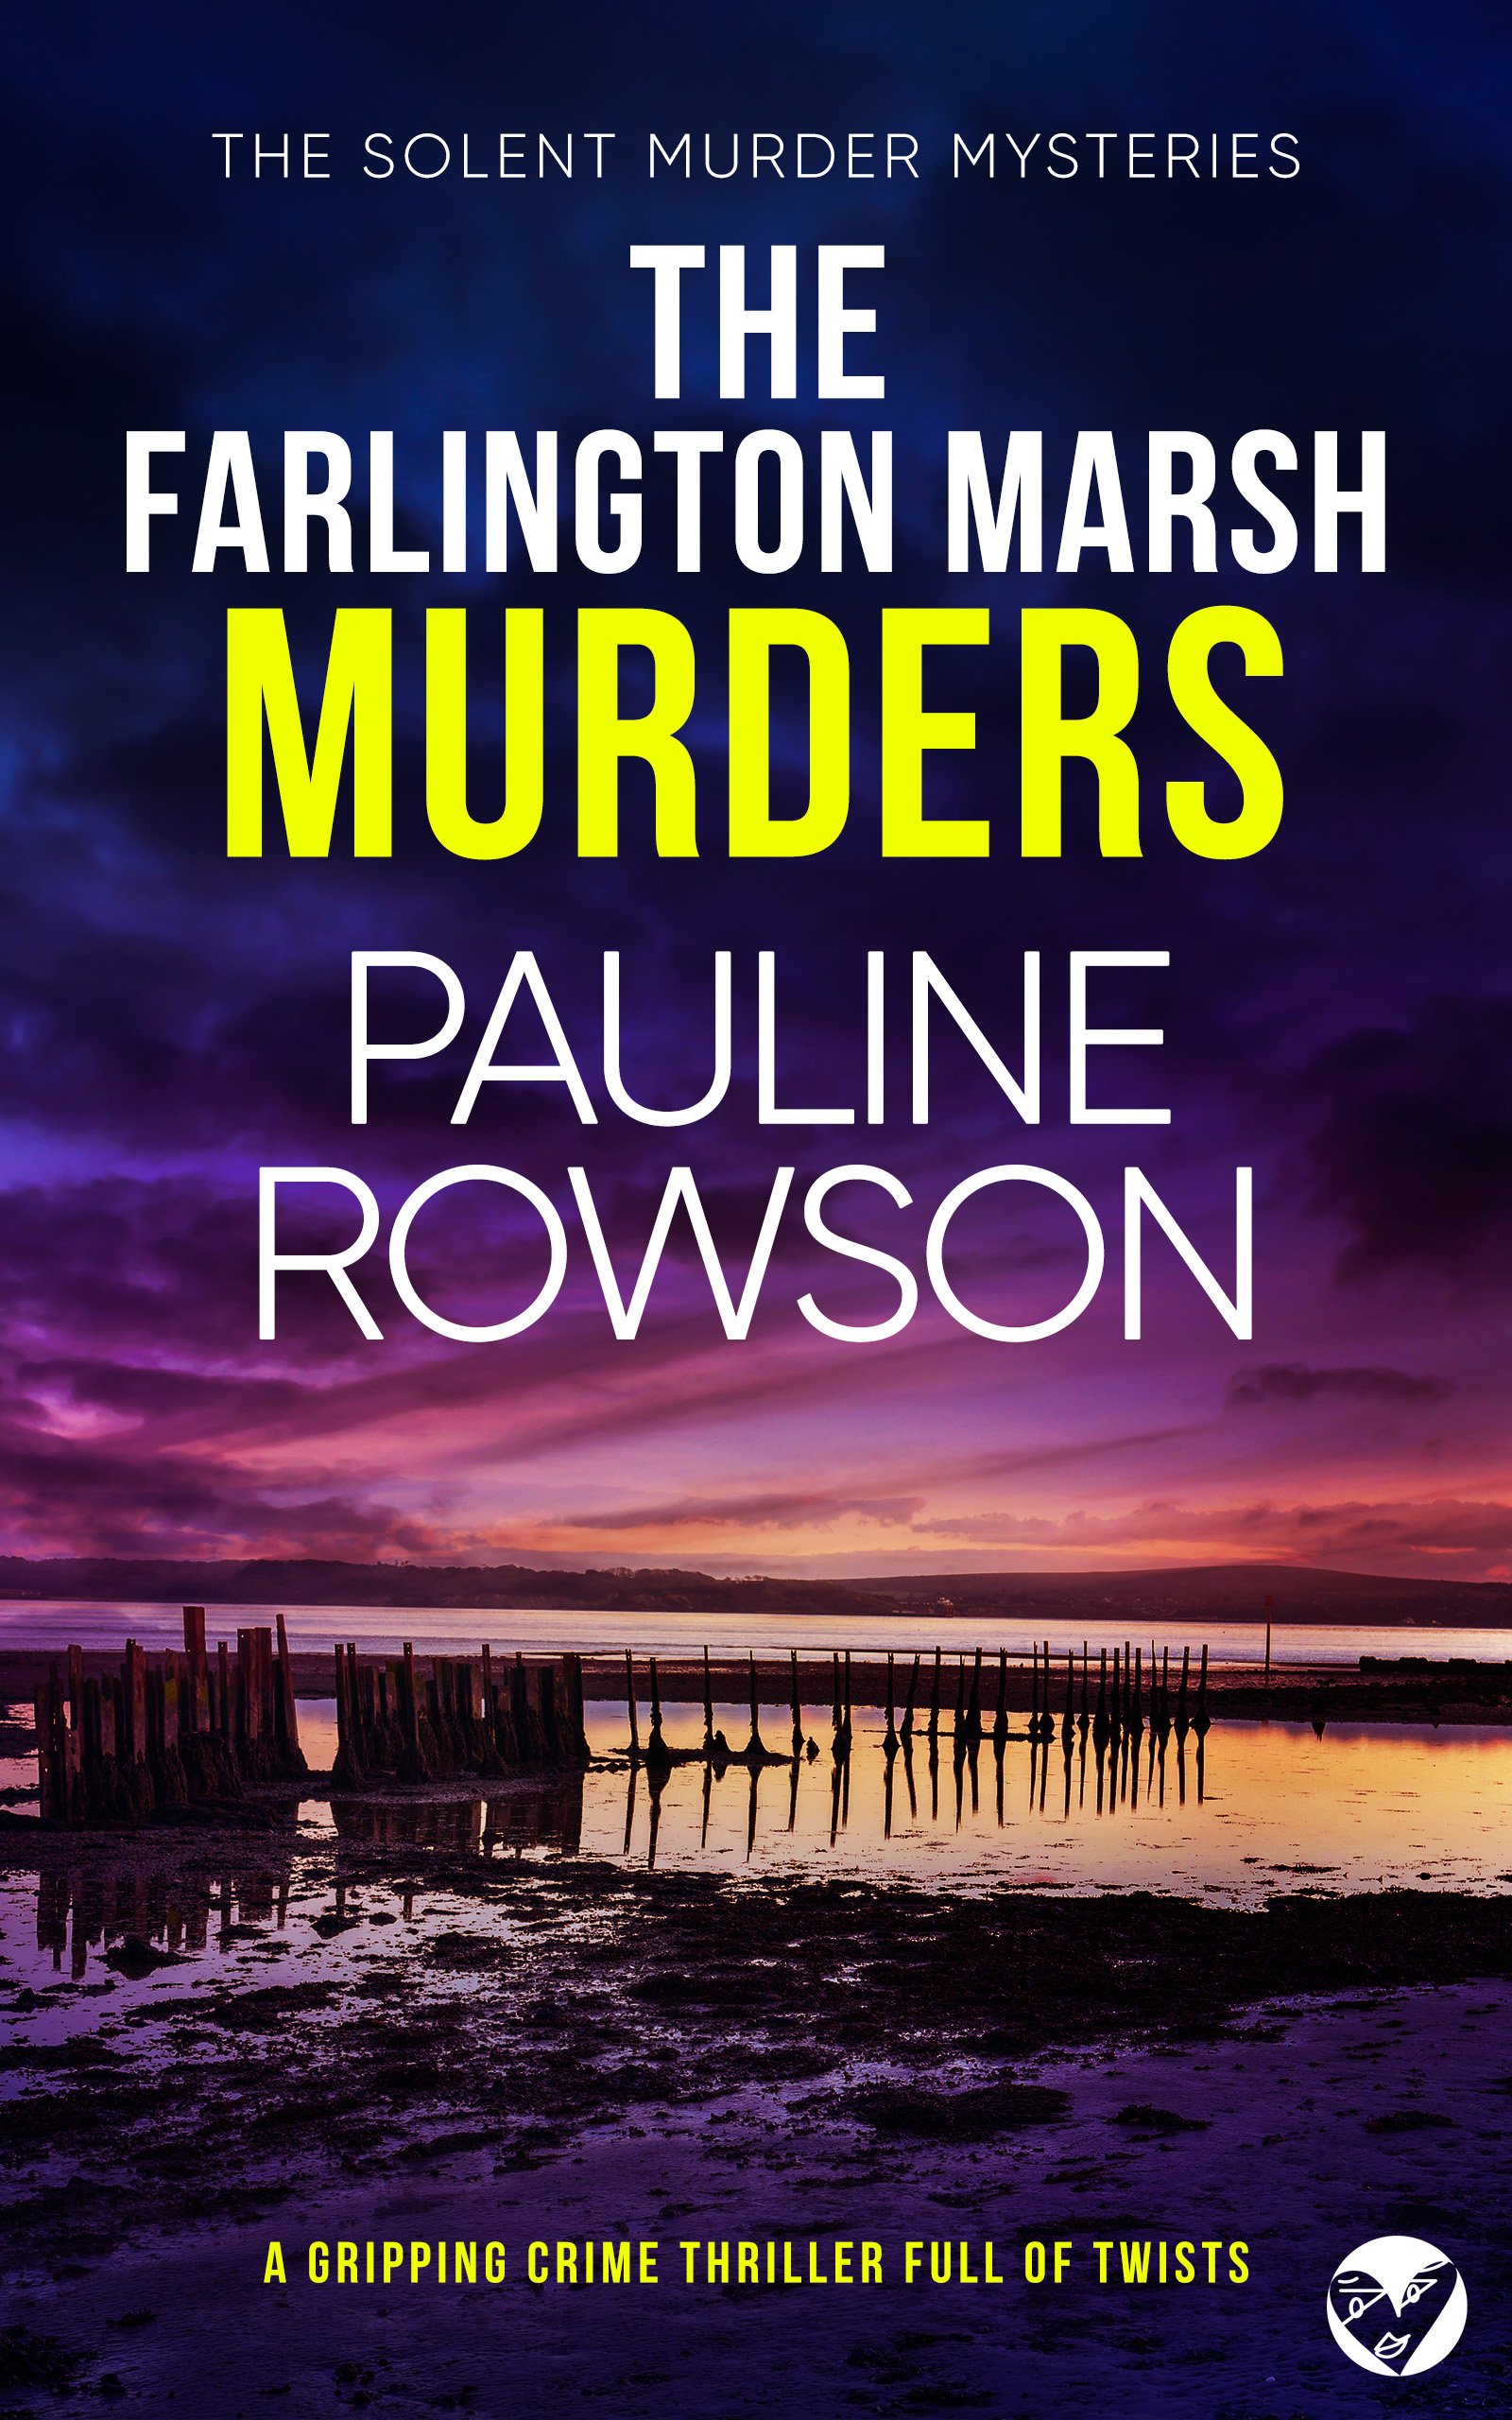 THE FARLINGTON MARSH MURDERS Cover publish.jpg